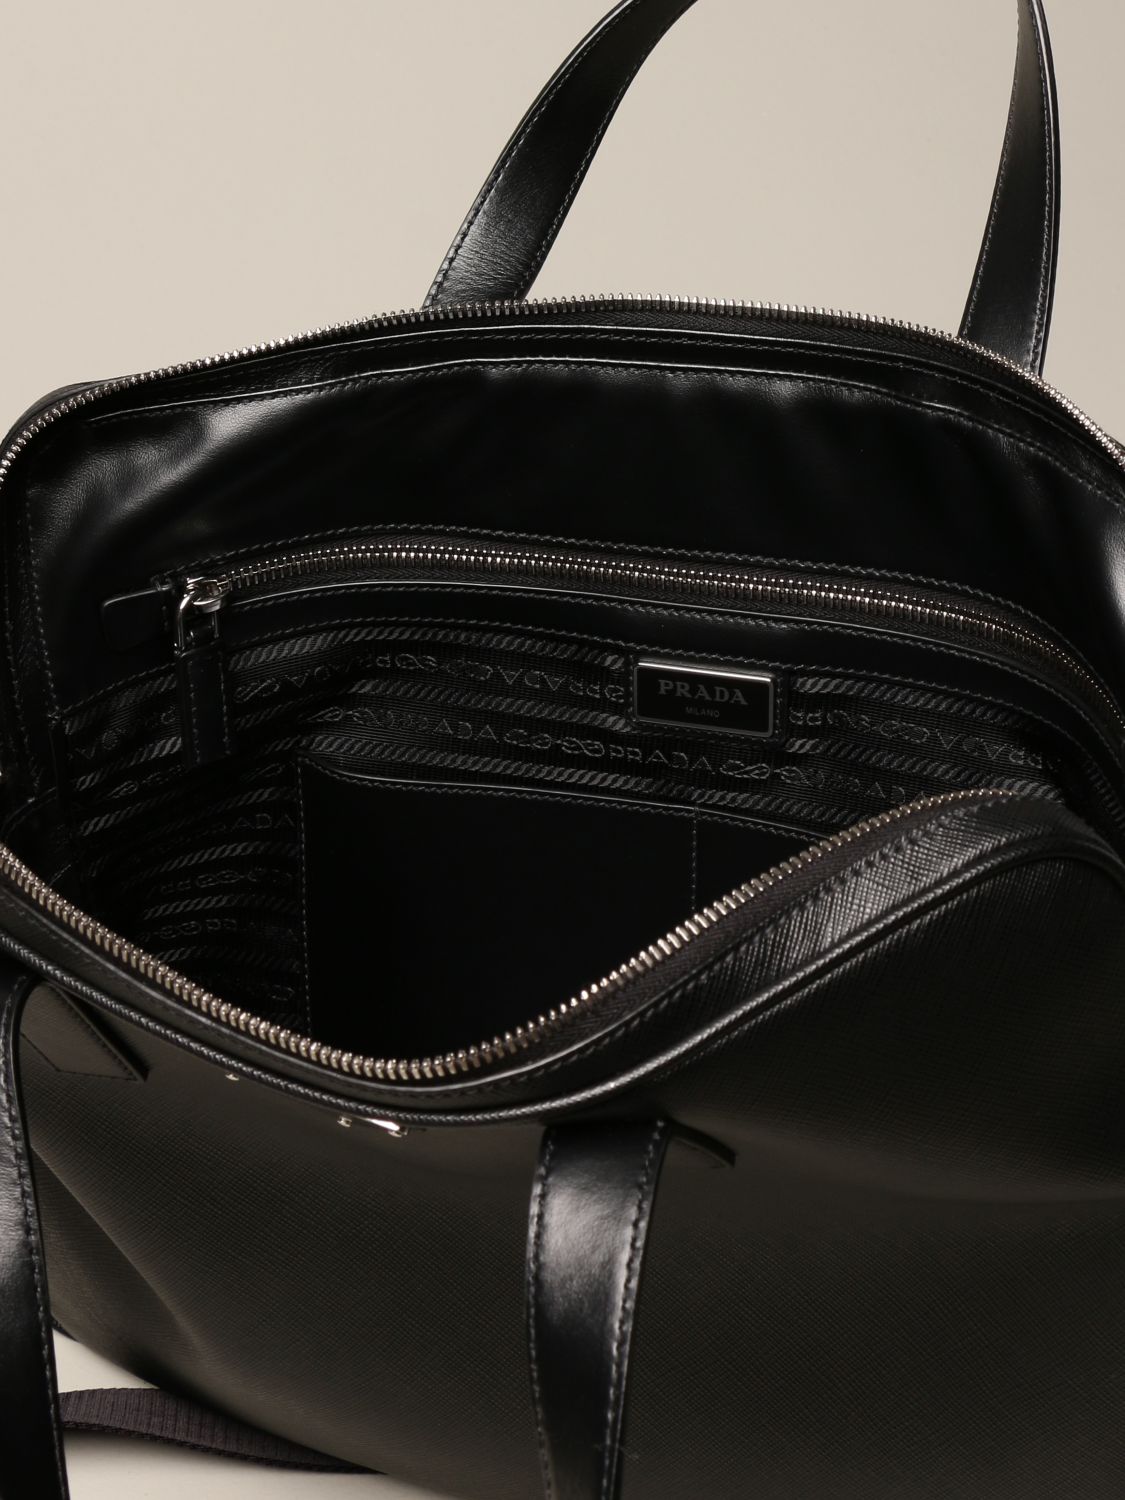 Prada Men's VA0891 9Z2 Bag, Black, One Size : : Computers &  Accessories